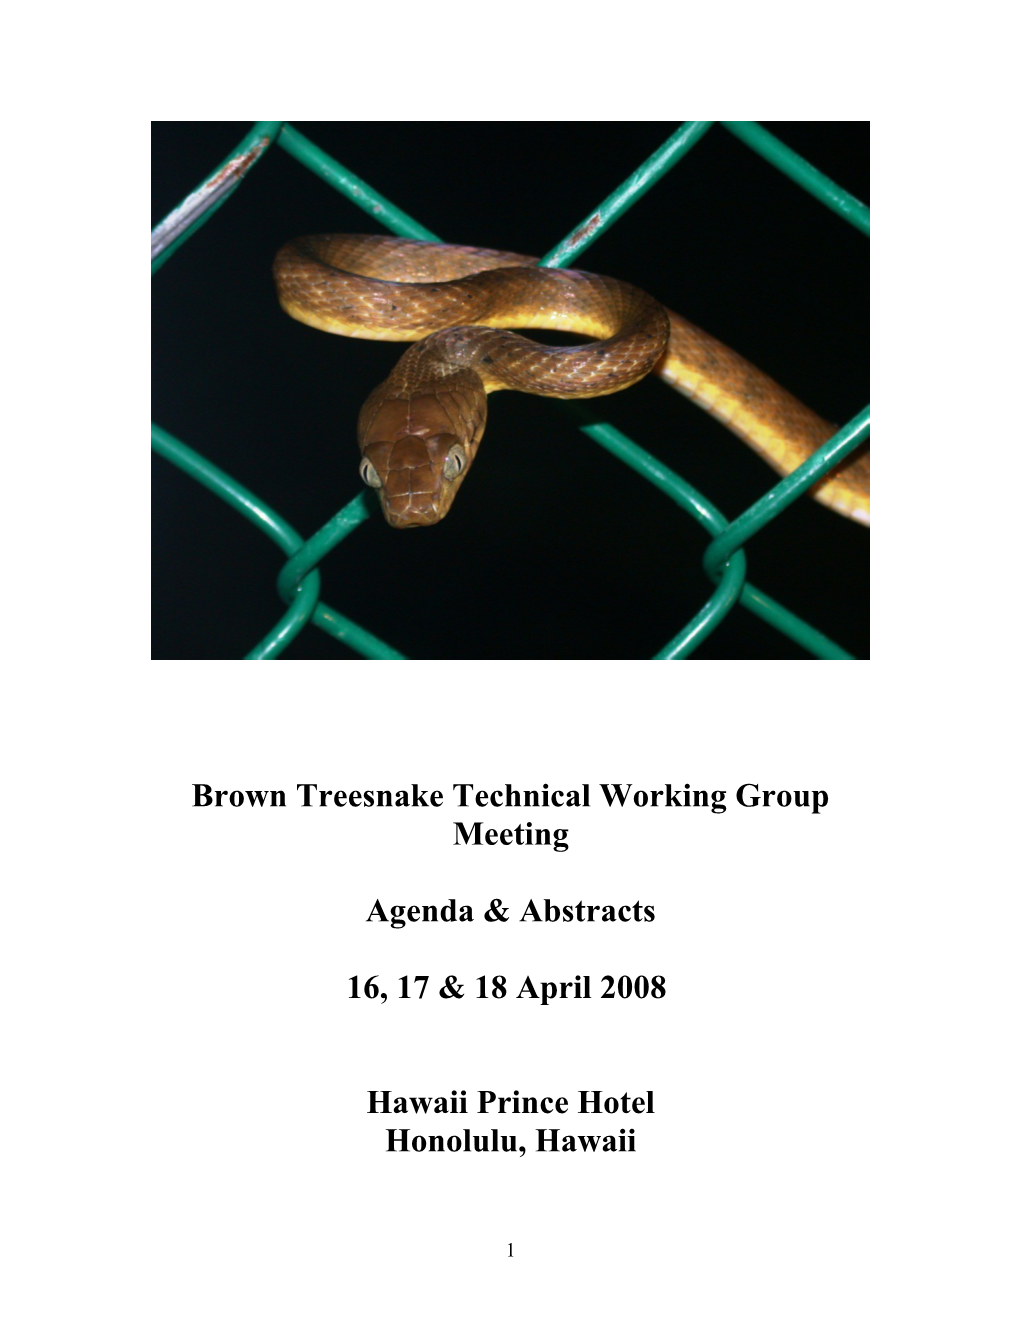 Brown Treesnake Technical Working Group Meeting